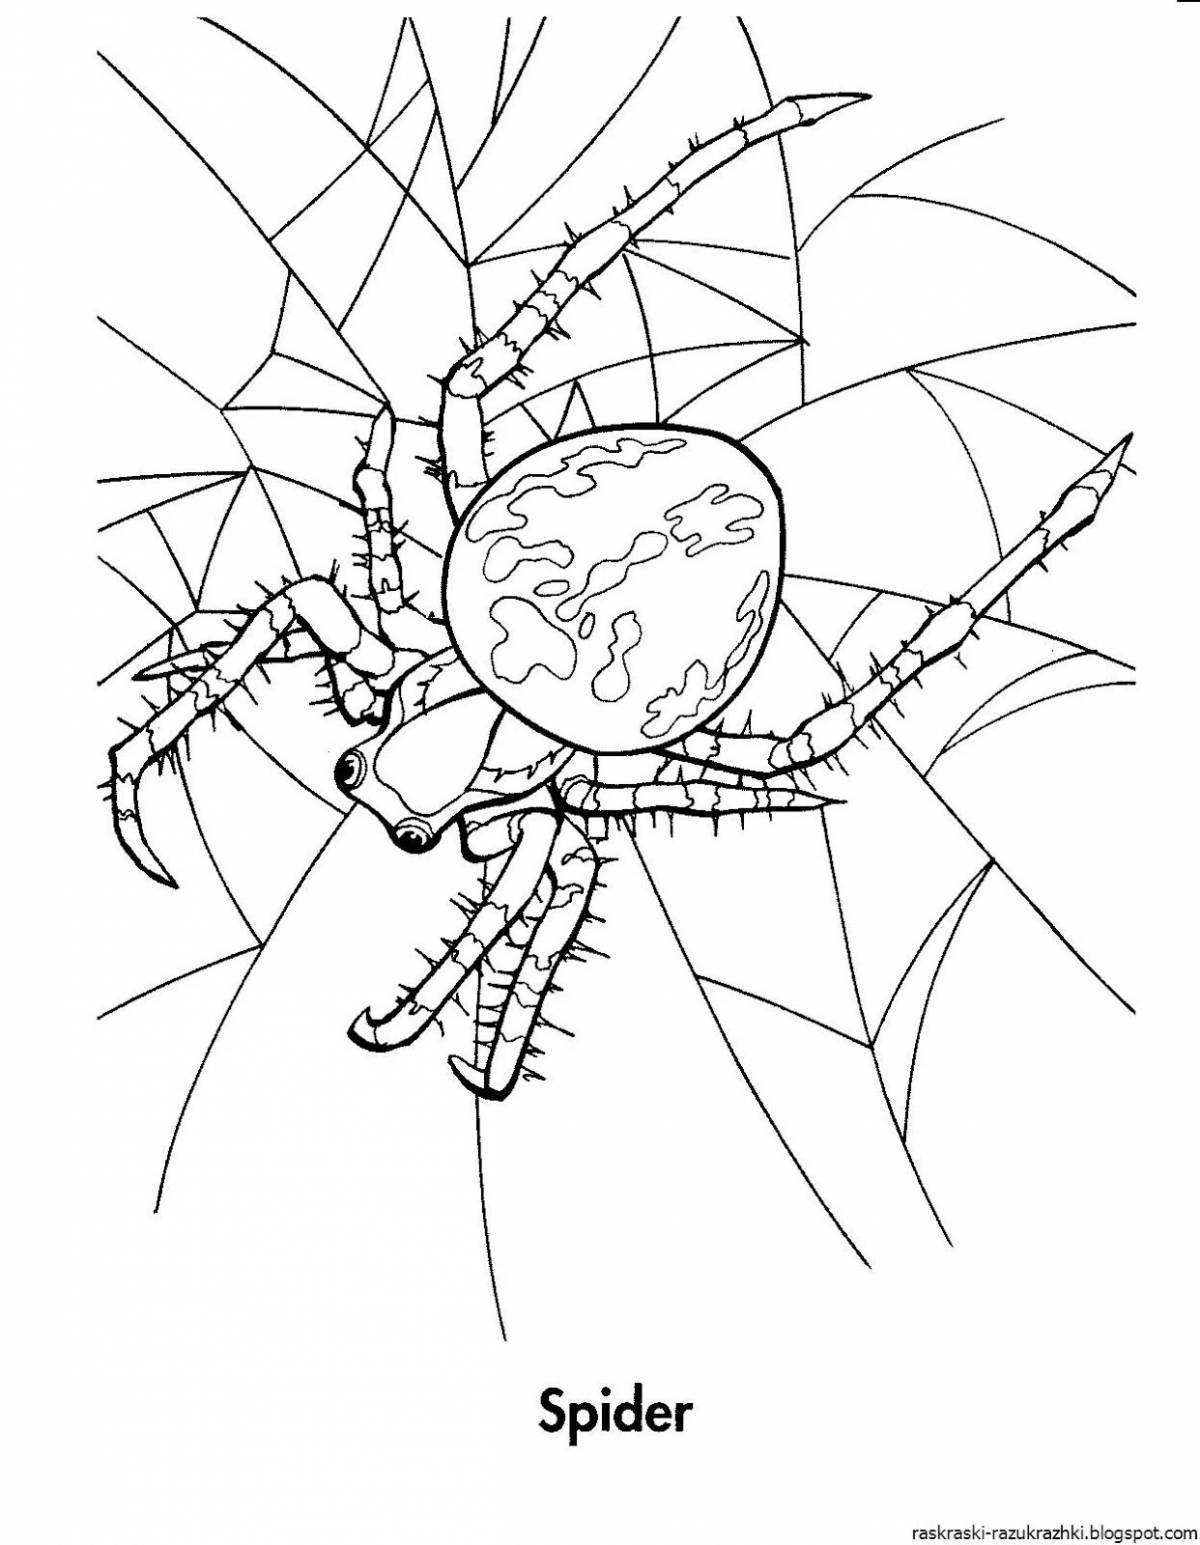 Spider cross #11